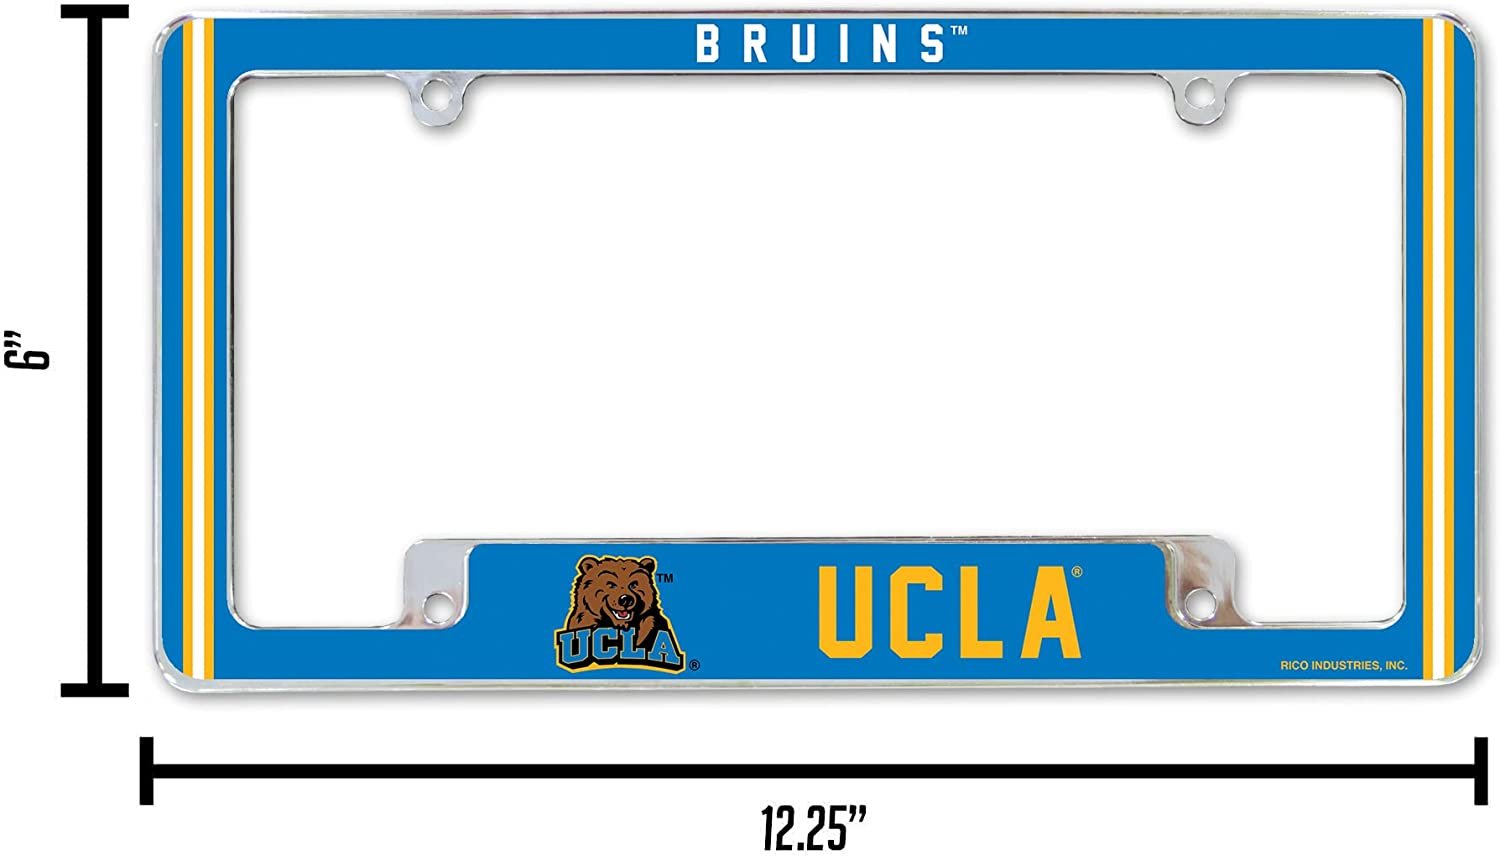 University of California Los Angeles Bruins UCLA Metal License Plate Frame Chrome Tag Cover Alternate Design 6x12 Inch